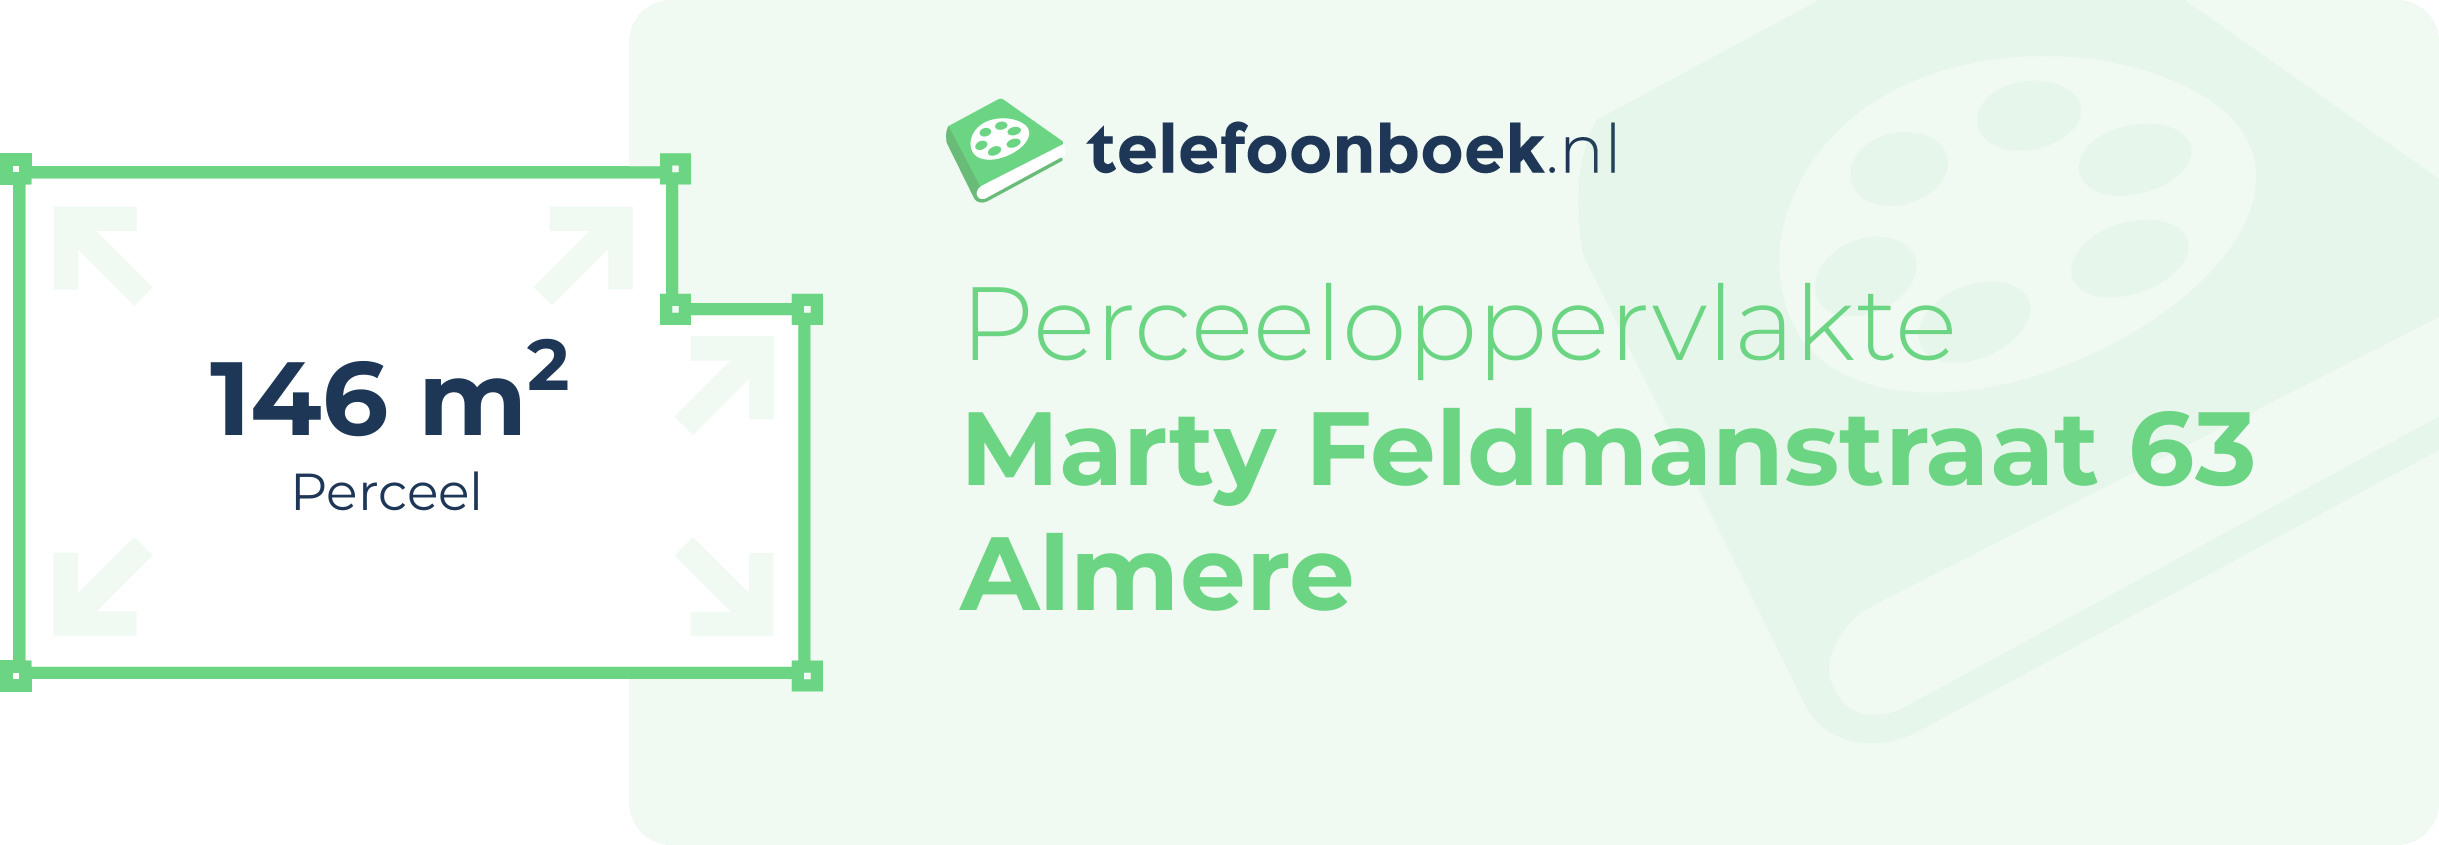 Perceeloppervlakte Marty Feldmanstraat 63 Almere